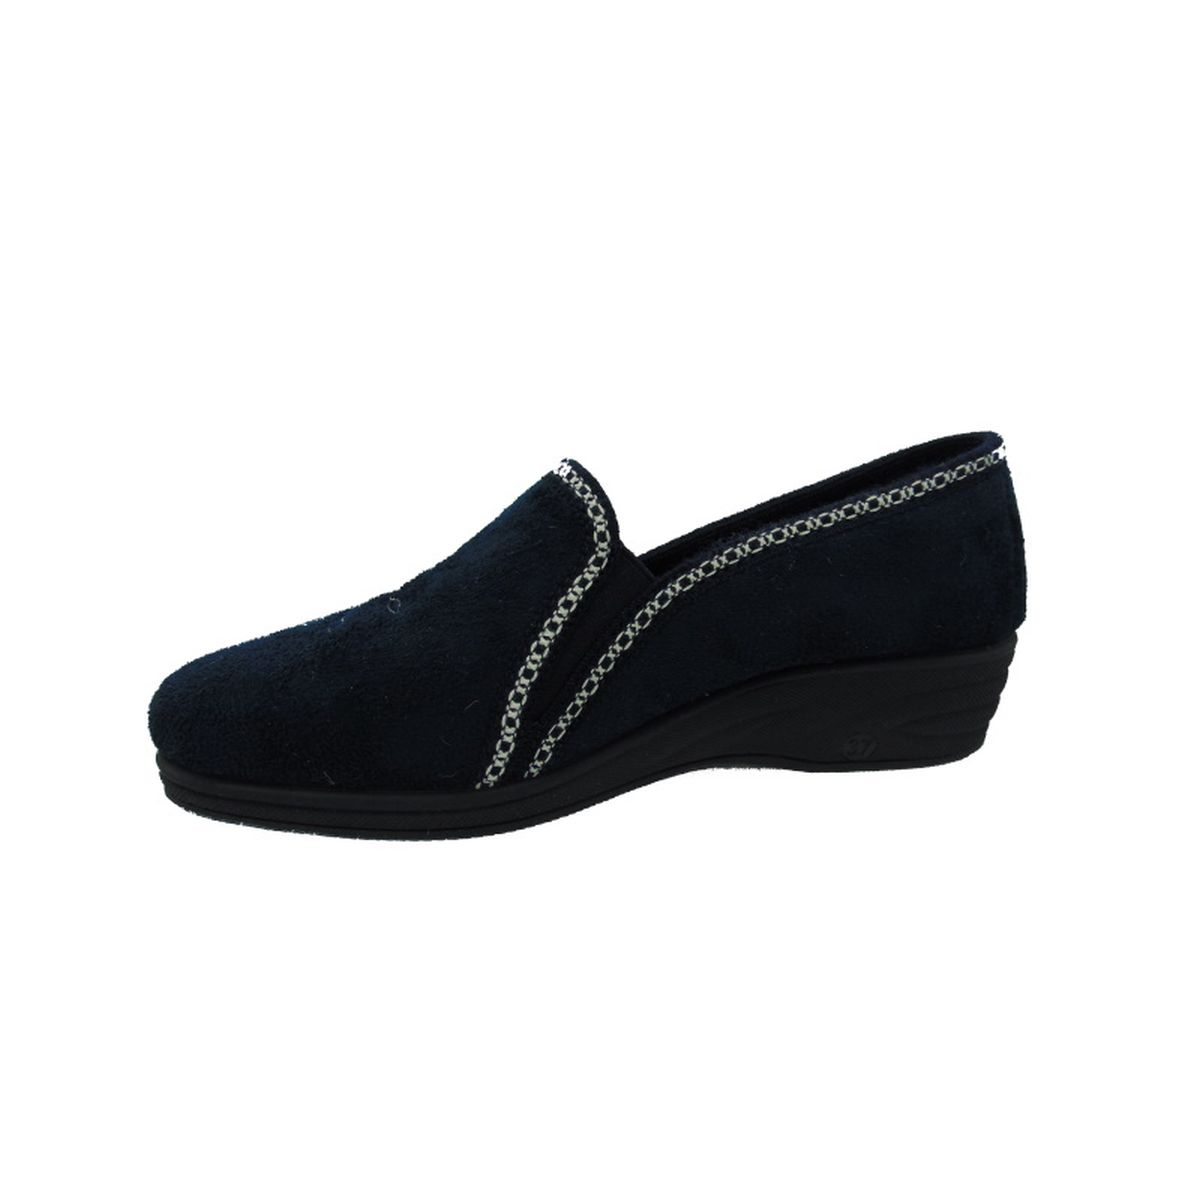 Pantofola Donna con elastici laterali Emanuela 855 Blu